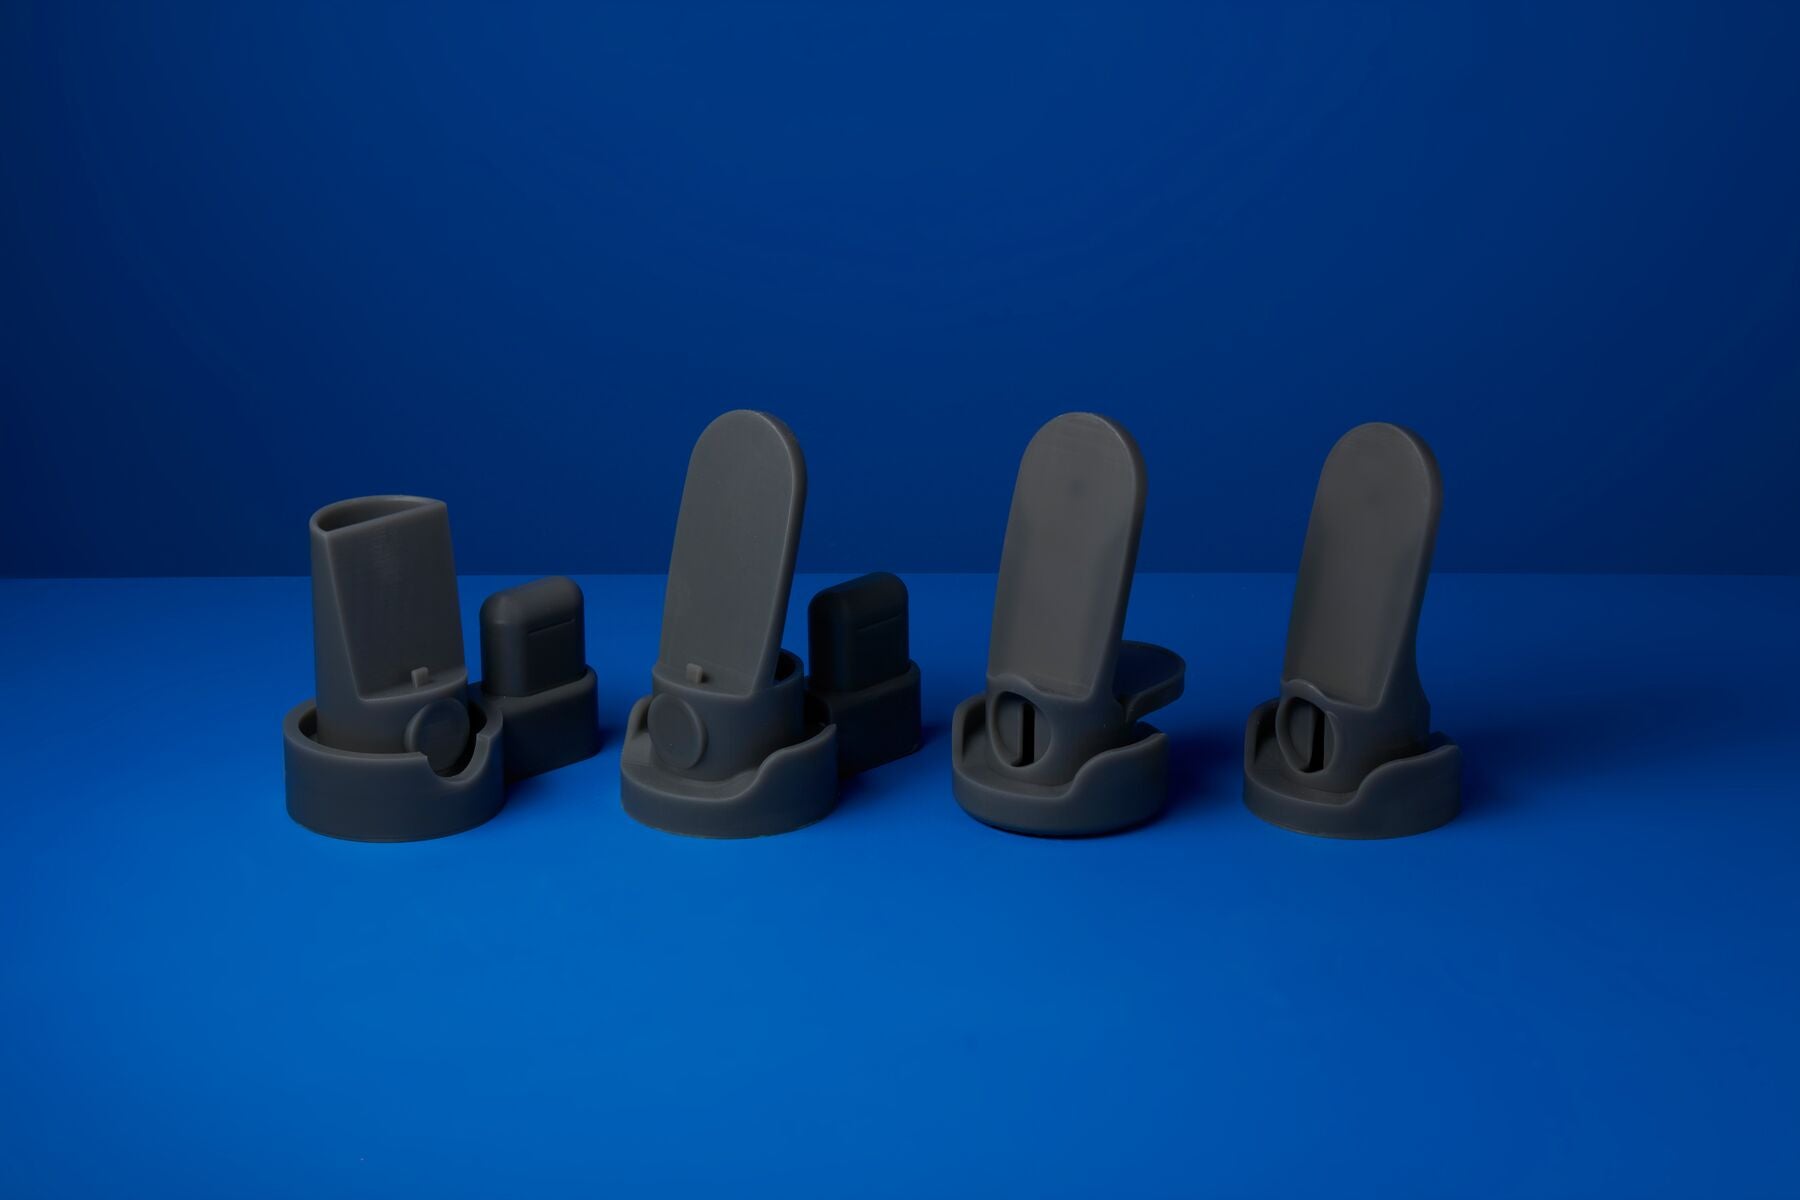 3D printed phone holder part